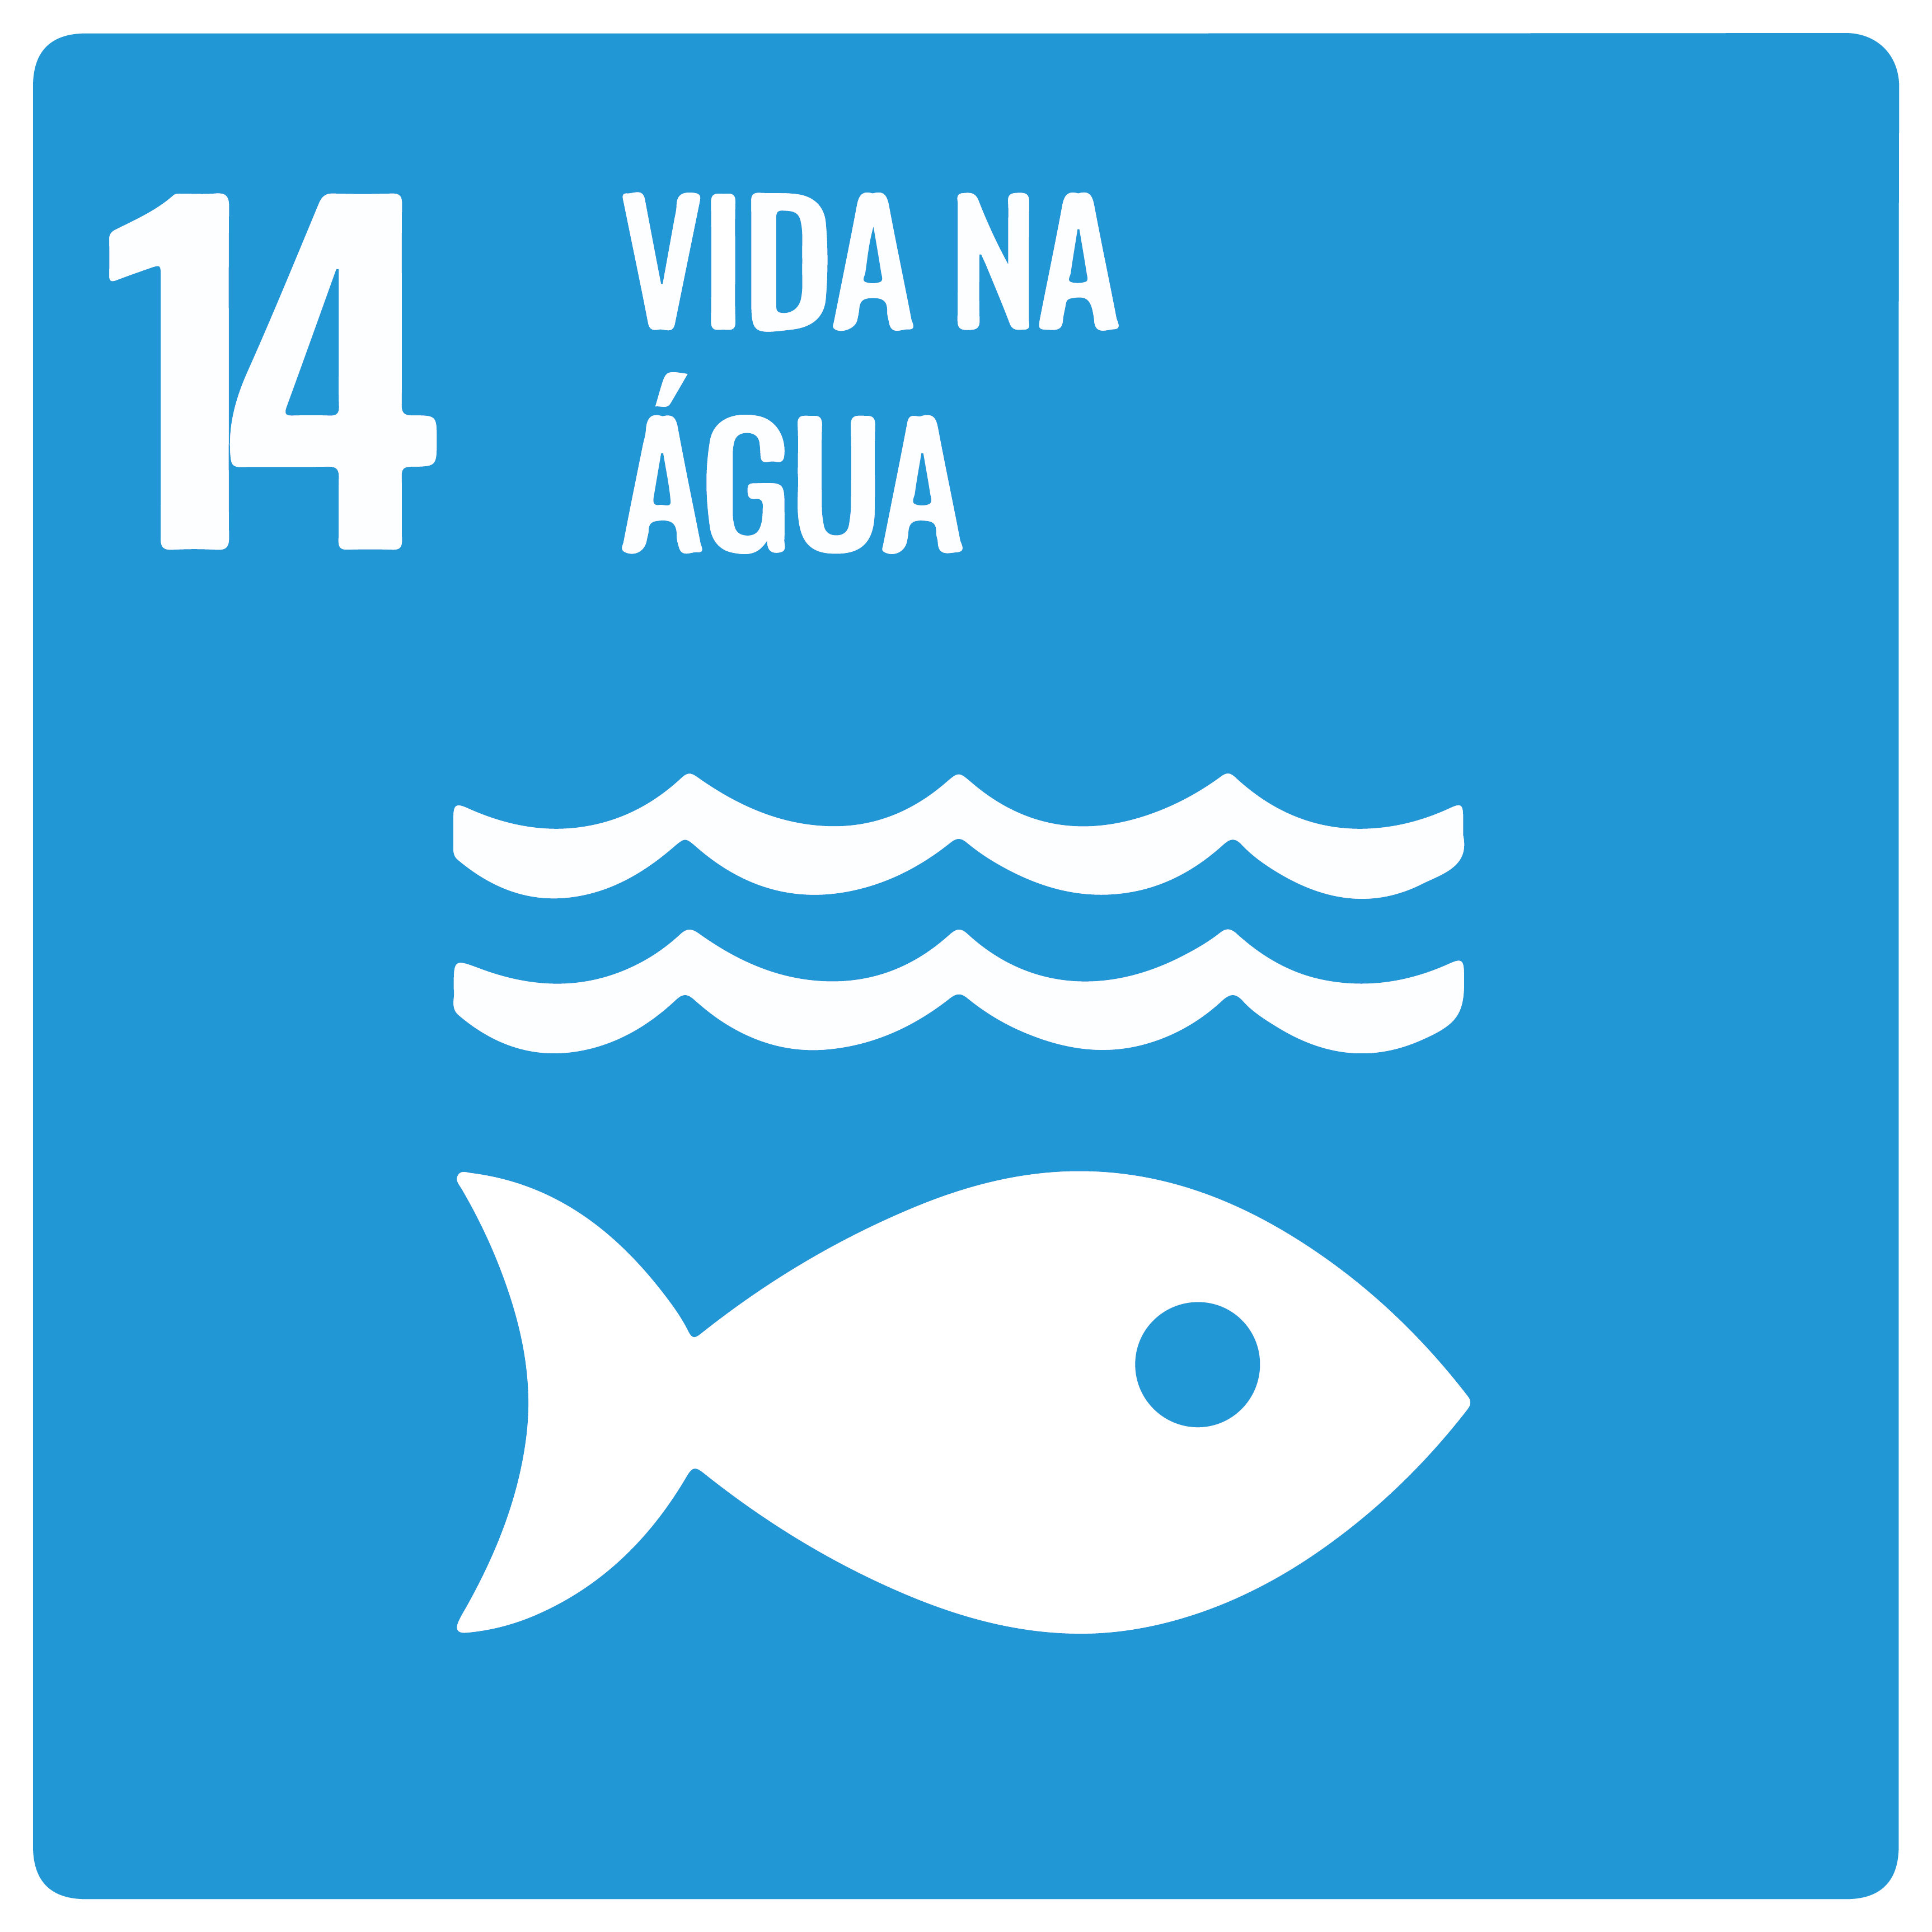 Na imagem,item 14 da ODS: Vida na Água